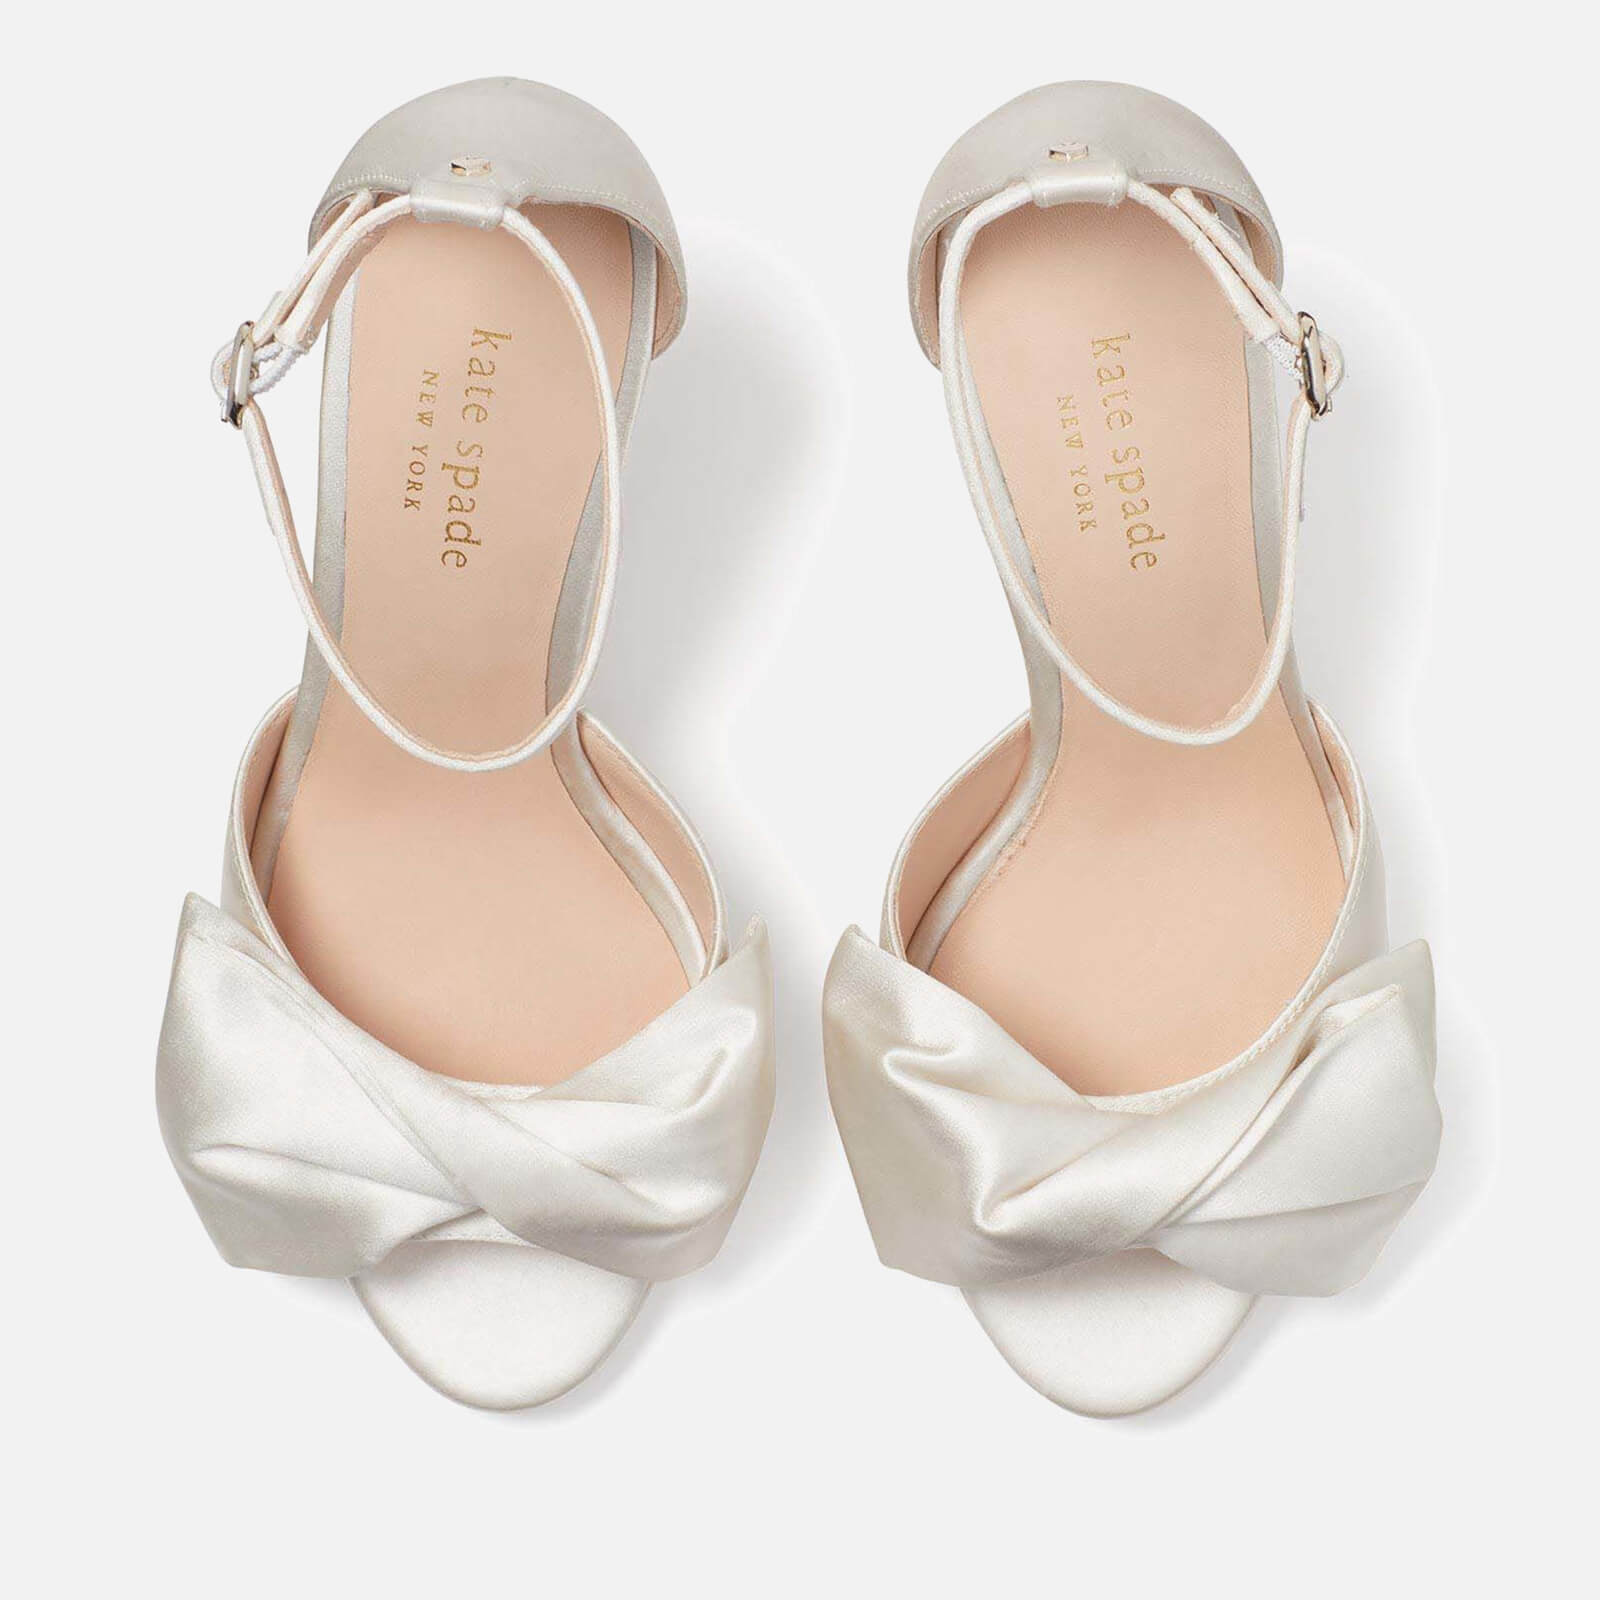 kate spade new york women's bridal bow satin heeled sandals - uk 8